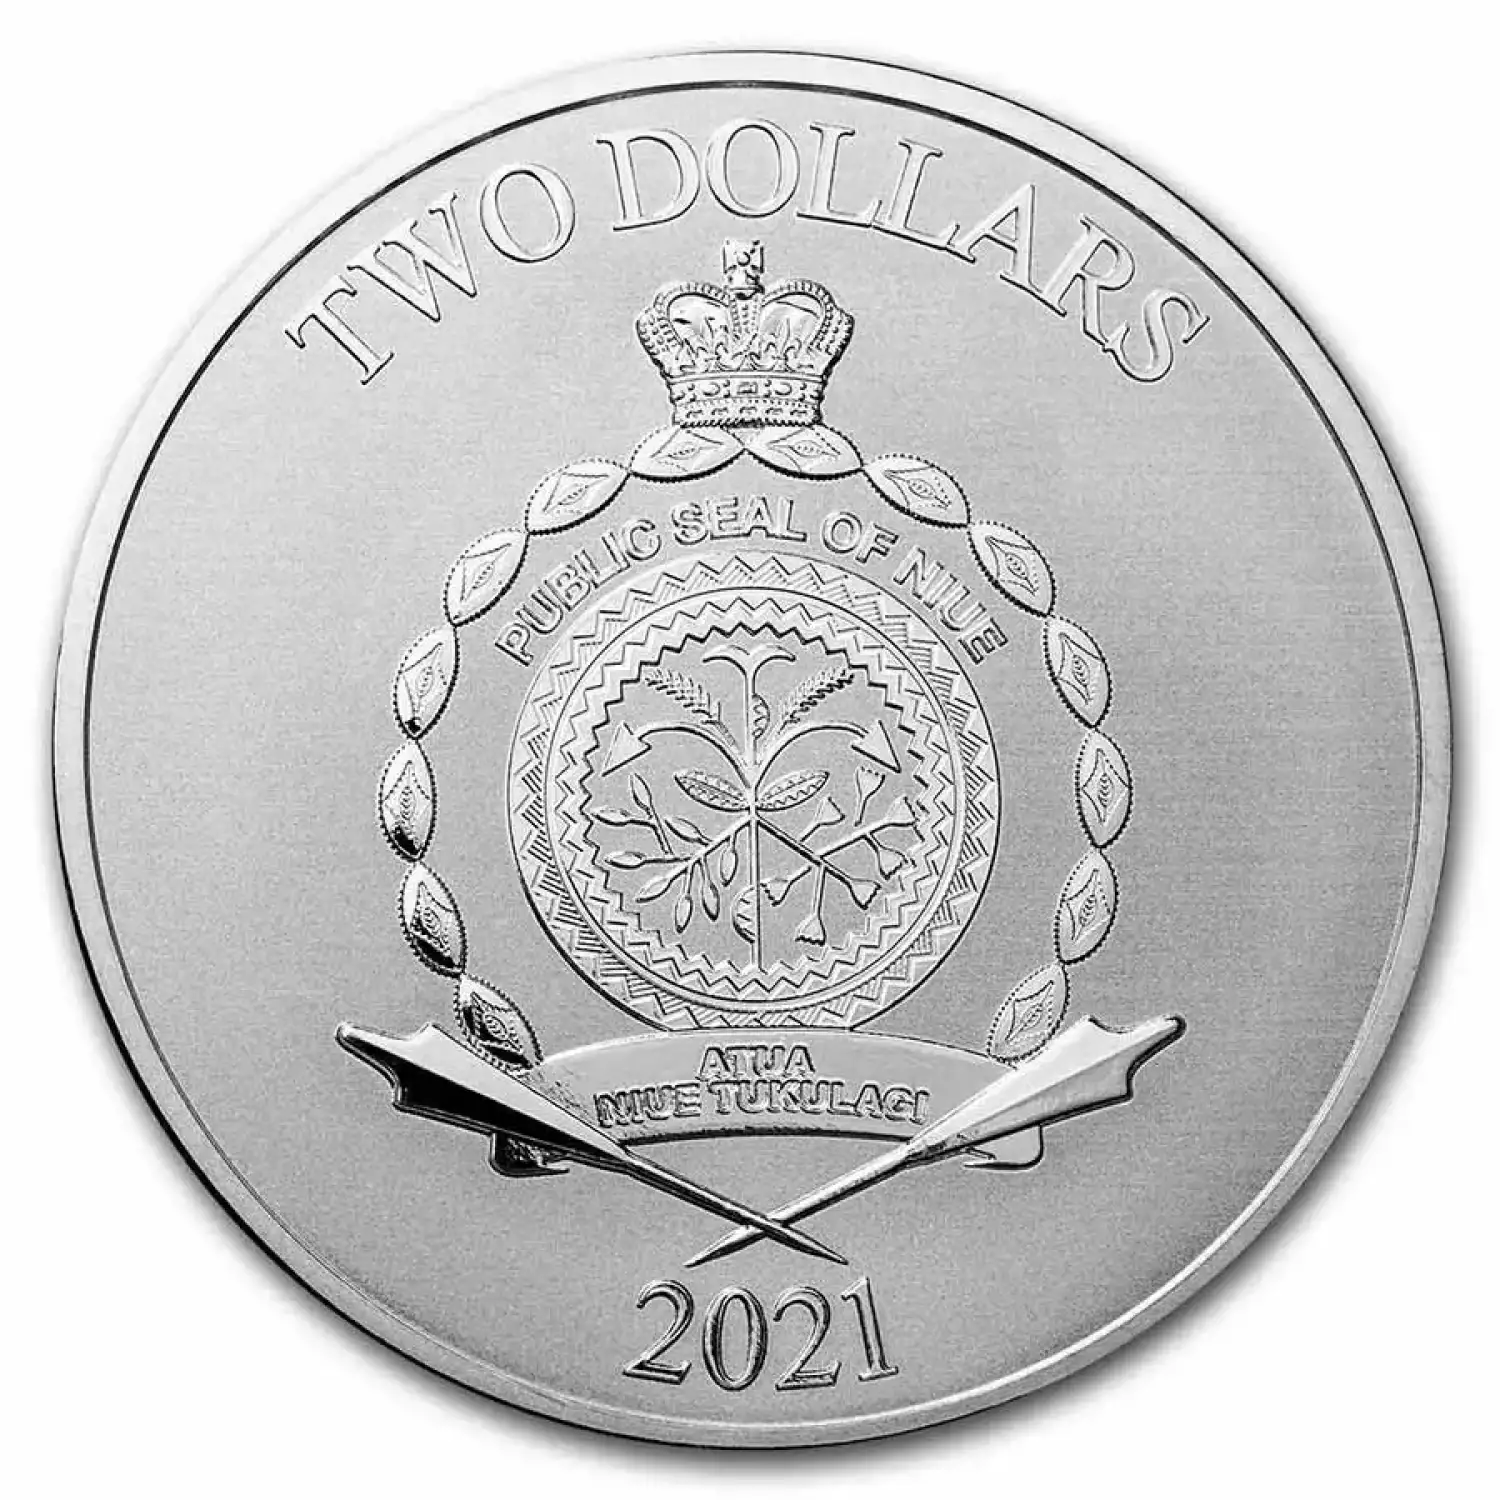 2021 Niue 1 oz Silver Coin $2 Star Wars The Mandalorian